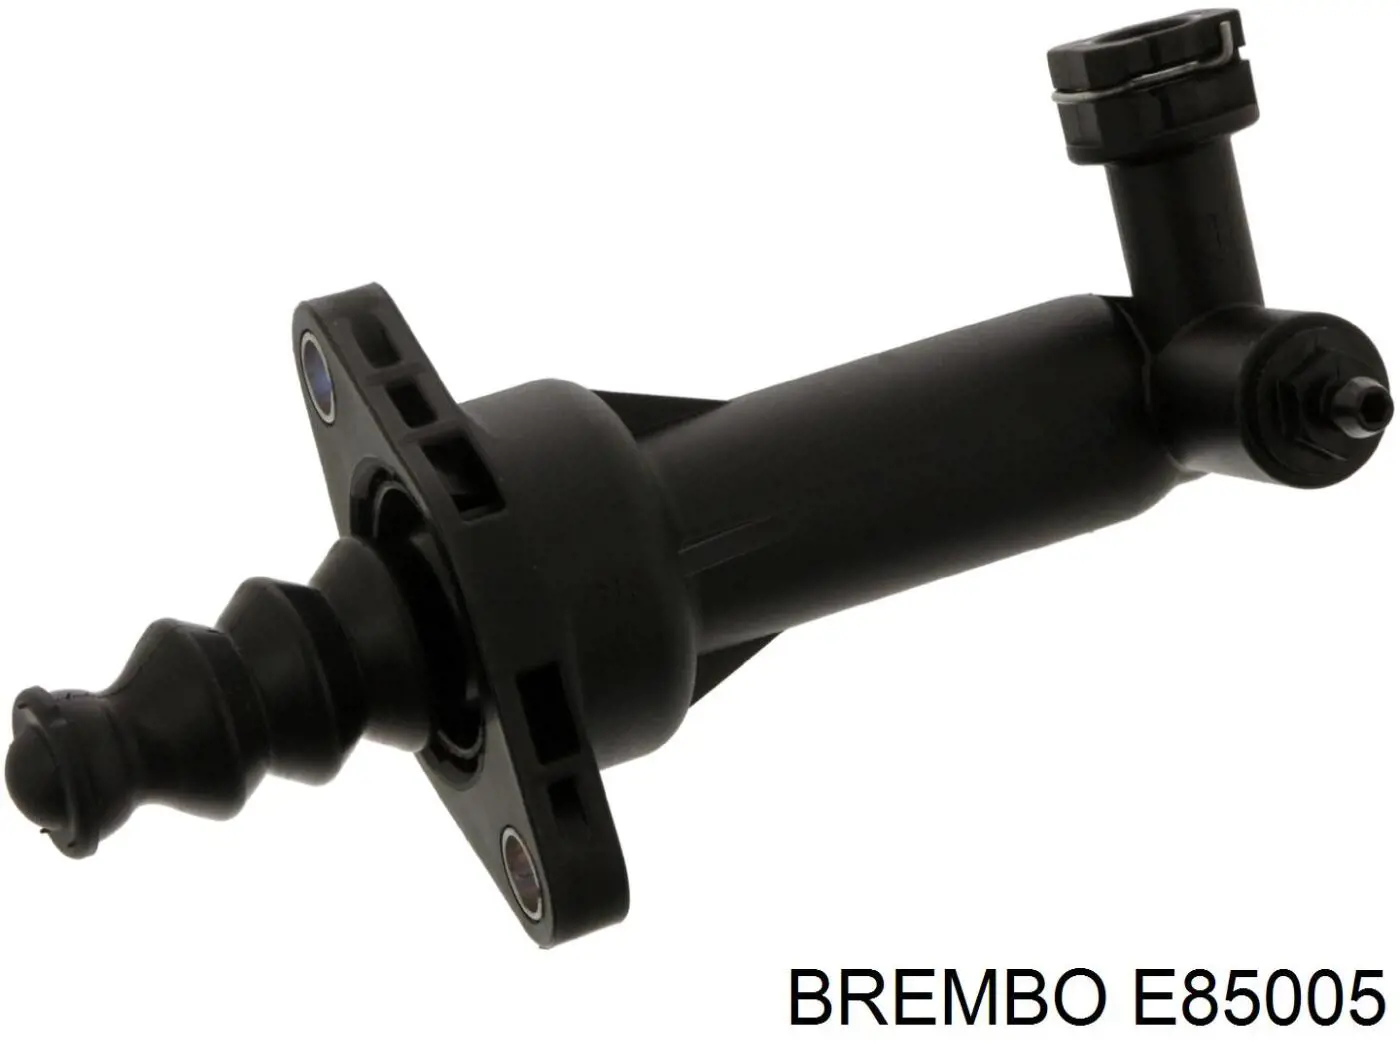 E85005 Brembo цилиндр сцепления рабочий